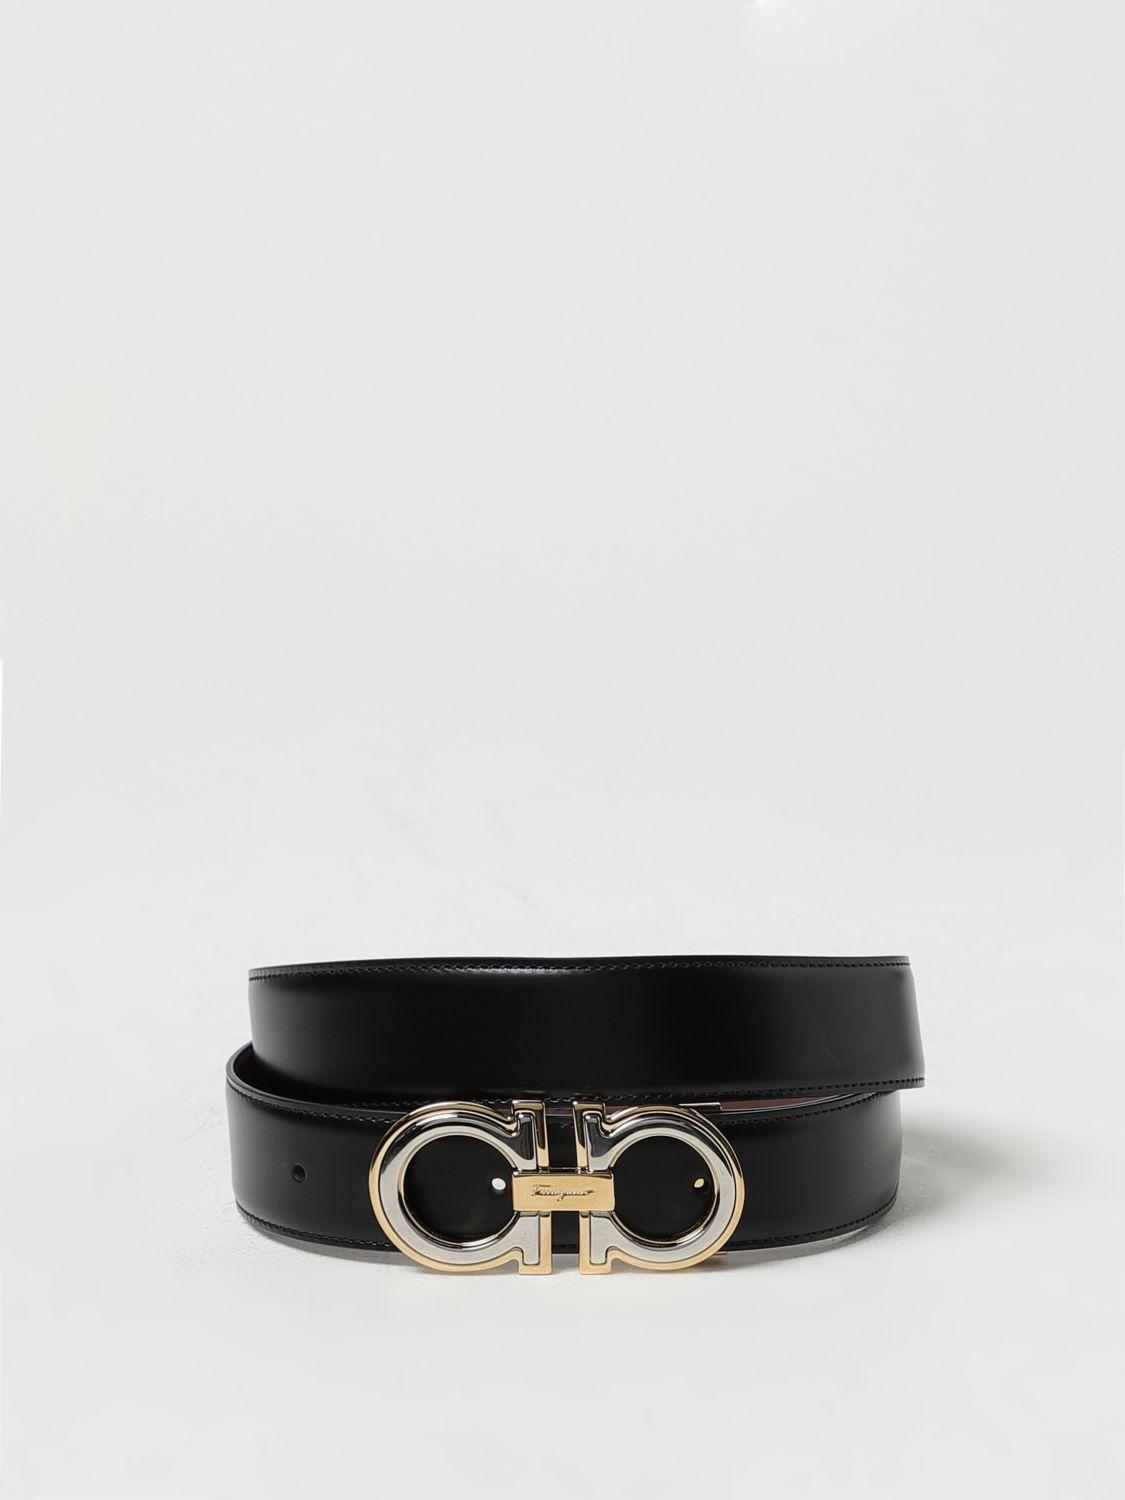 Salvatore Ferragamo Reversible Leather Belt, 105 / Black